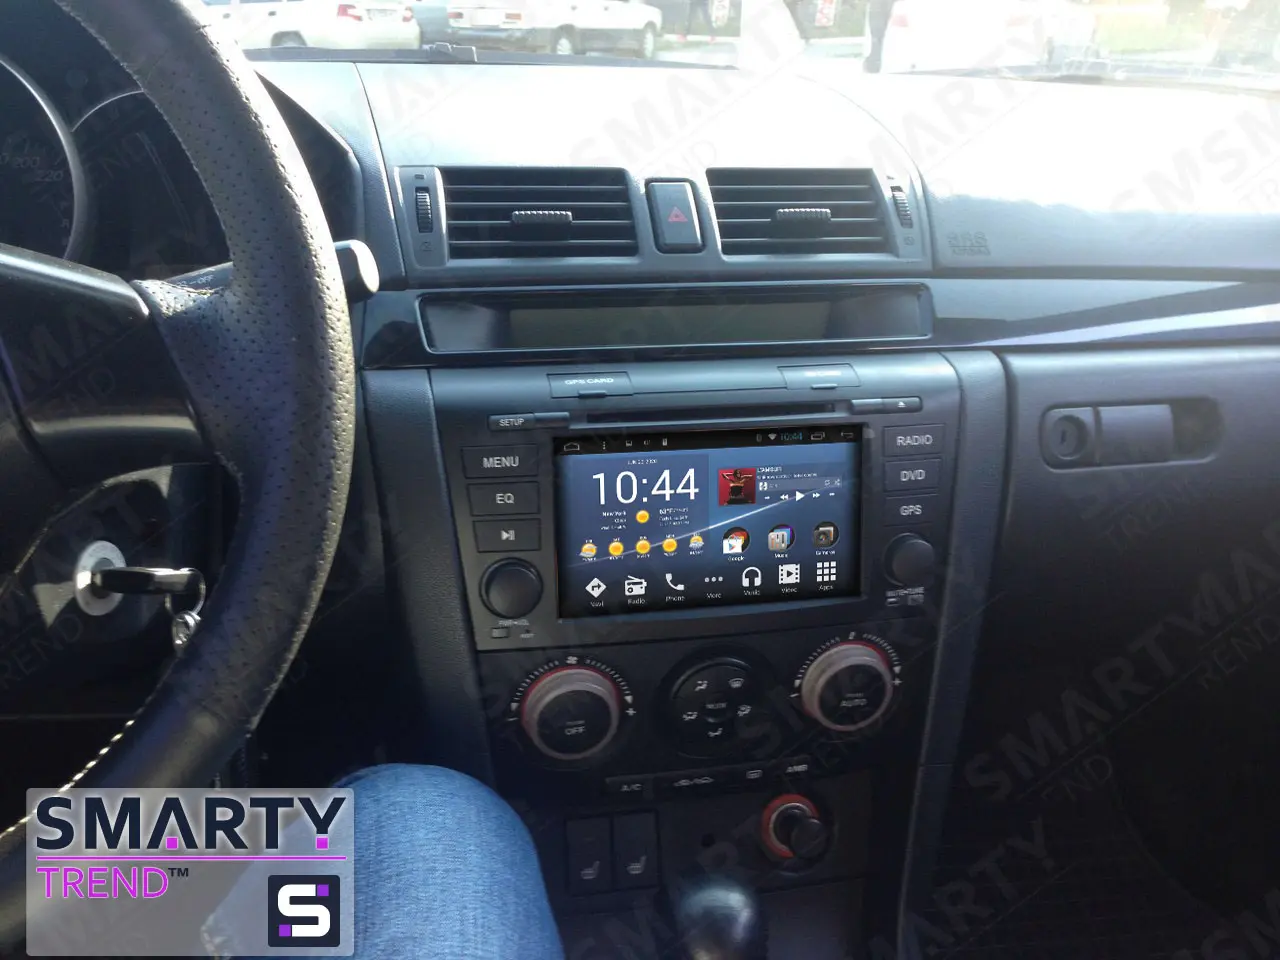 MAzda 3 Android in-dash navigation Car DVD